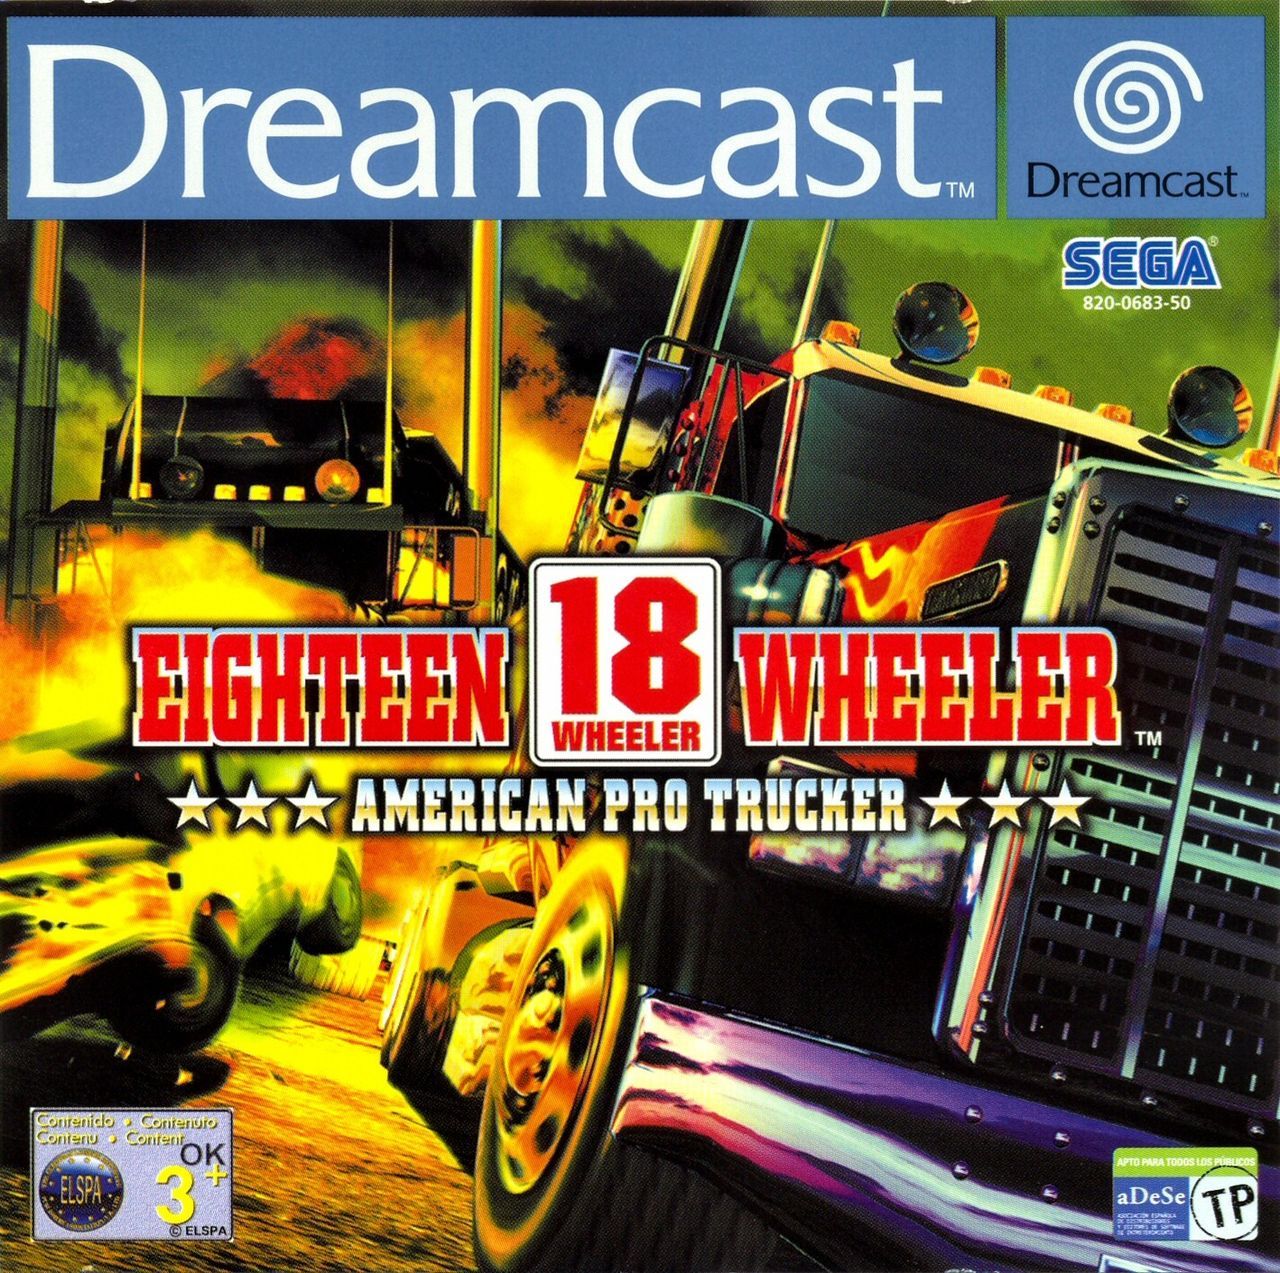 18 Wheeler: American Pro Trucker - это игра в жанрах экшены и гонки, разраб...